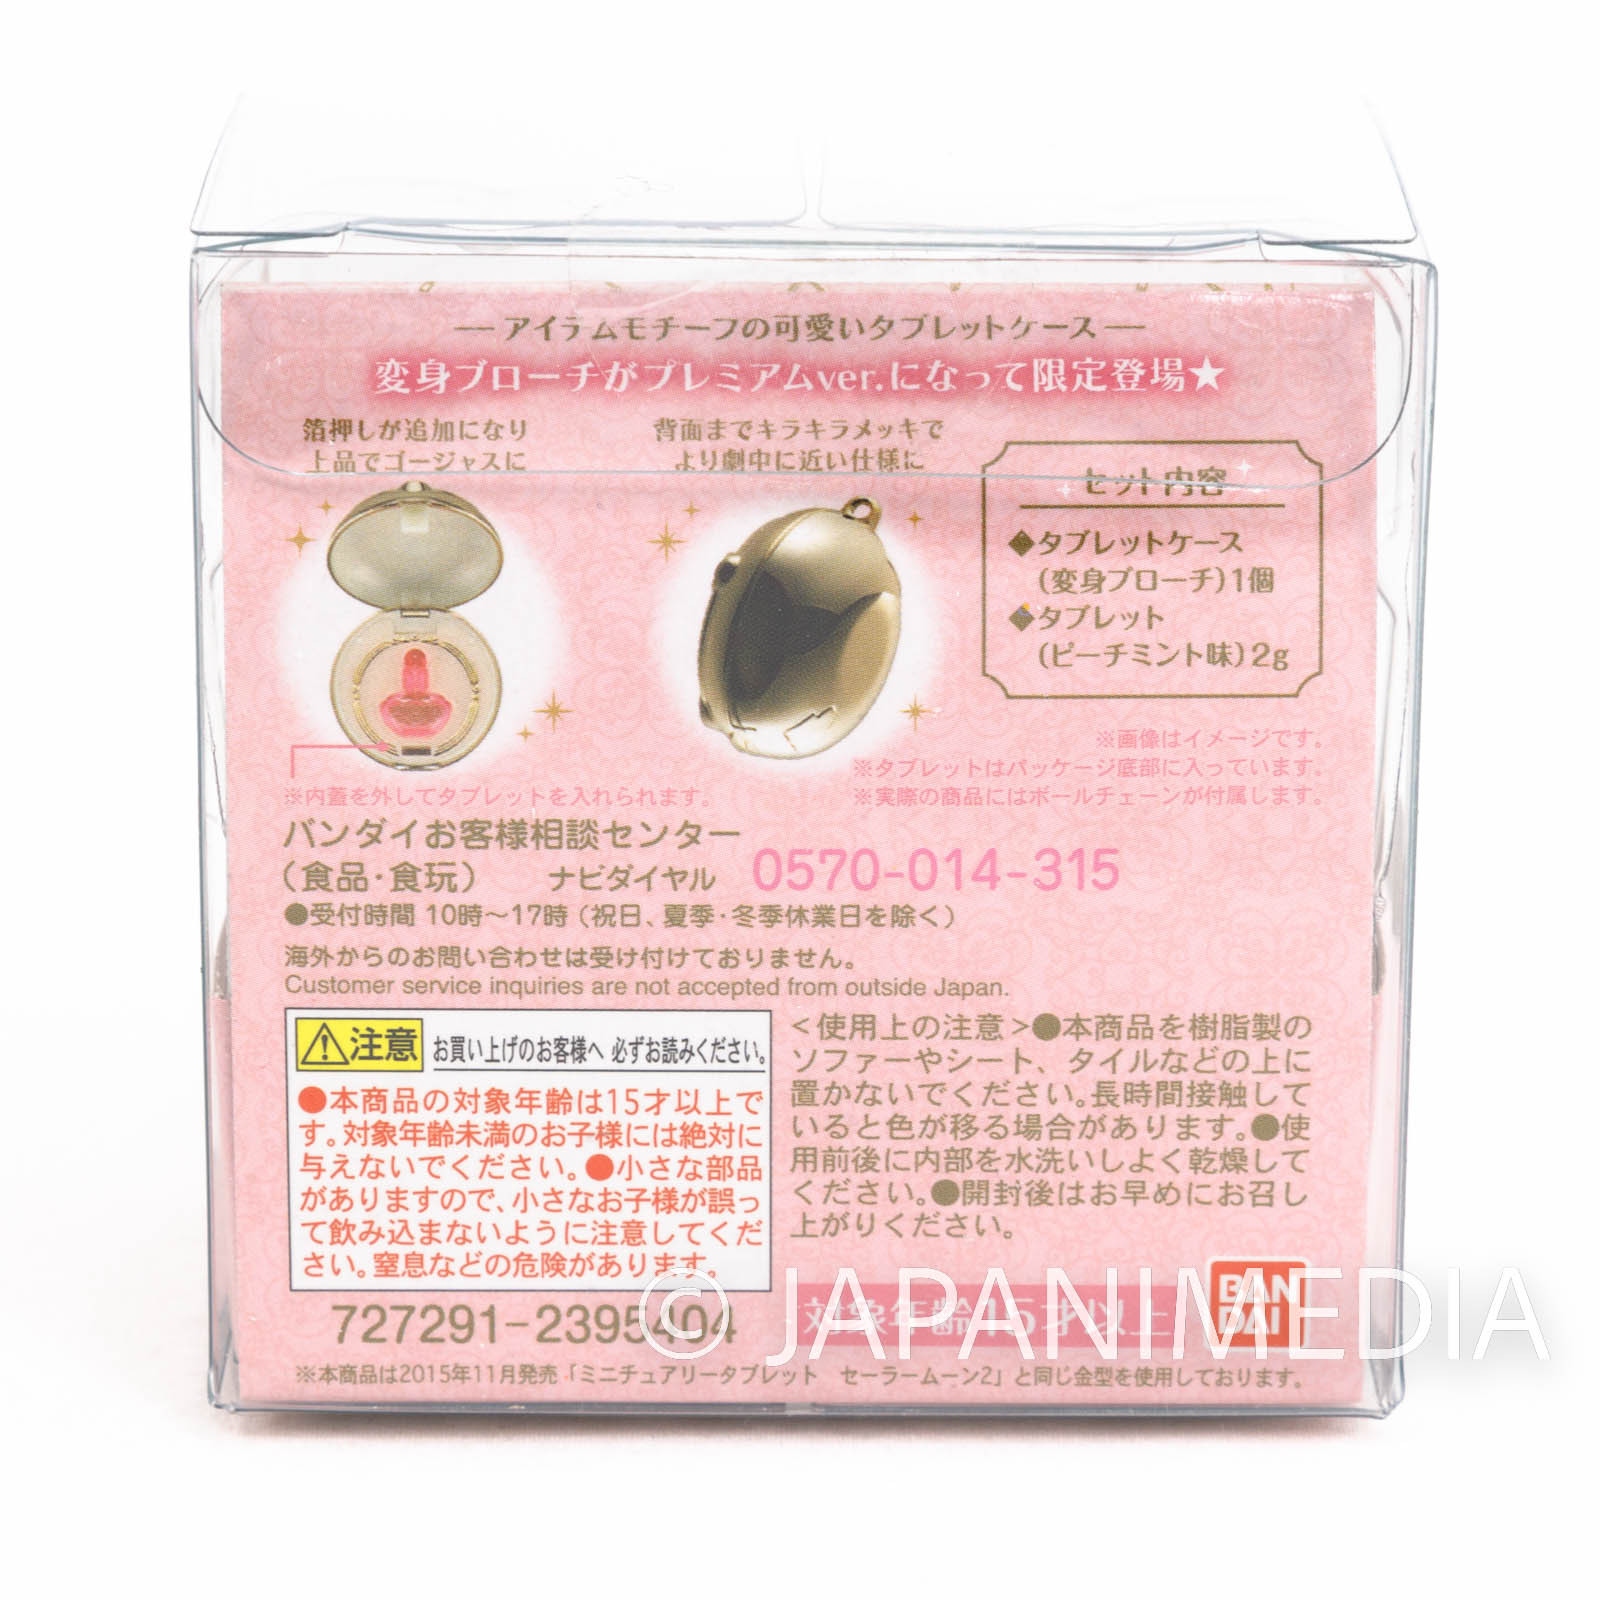 Sailor Moon Transformation Brooch Miniaturely Tablet case Premium ver. JAPAN ANIME